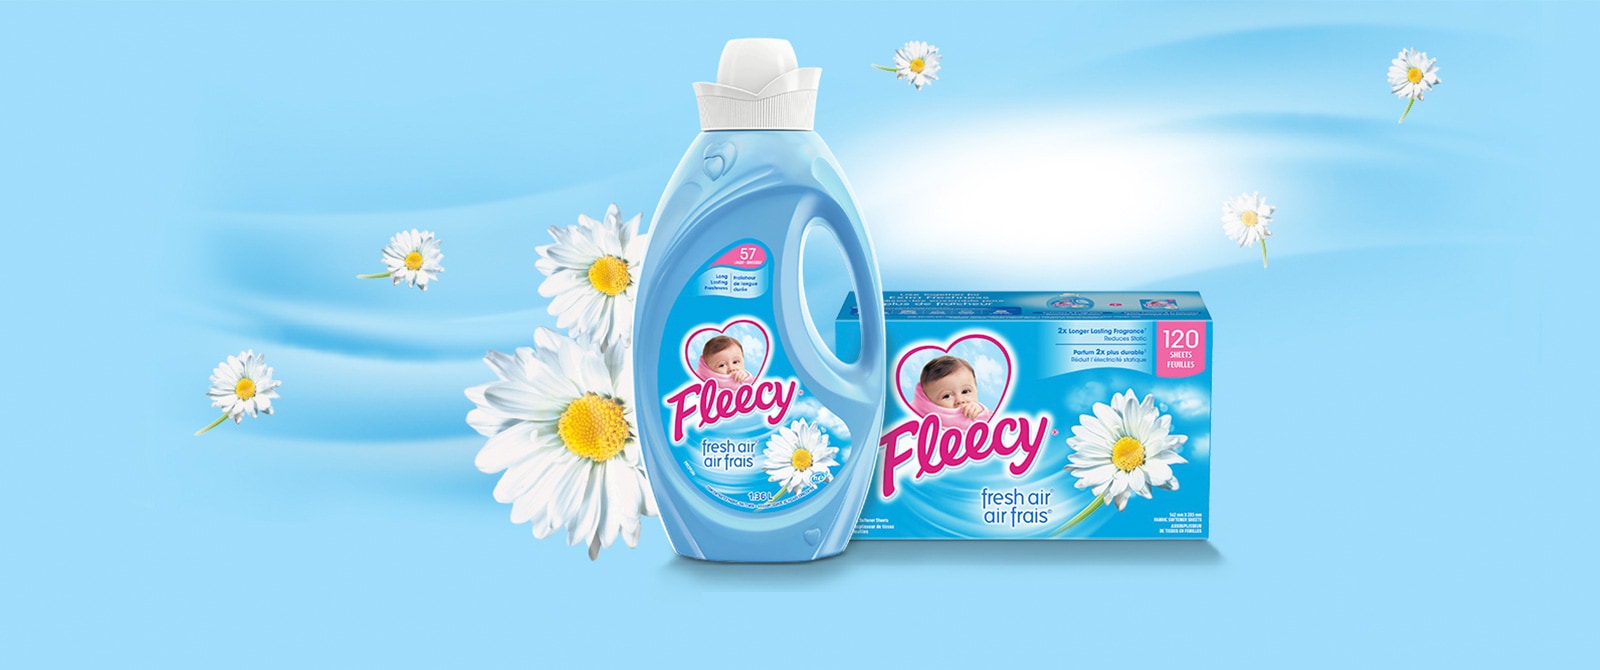 Fleecy Products